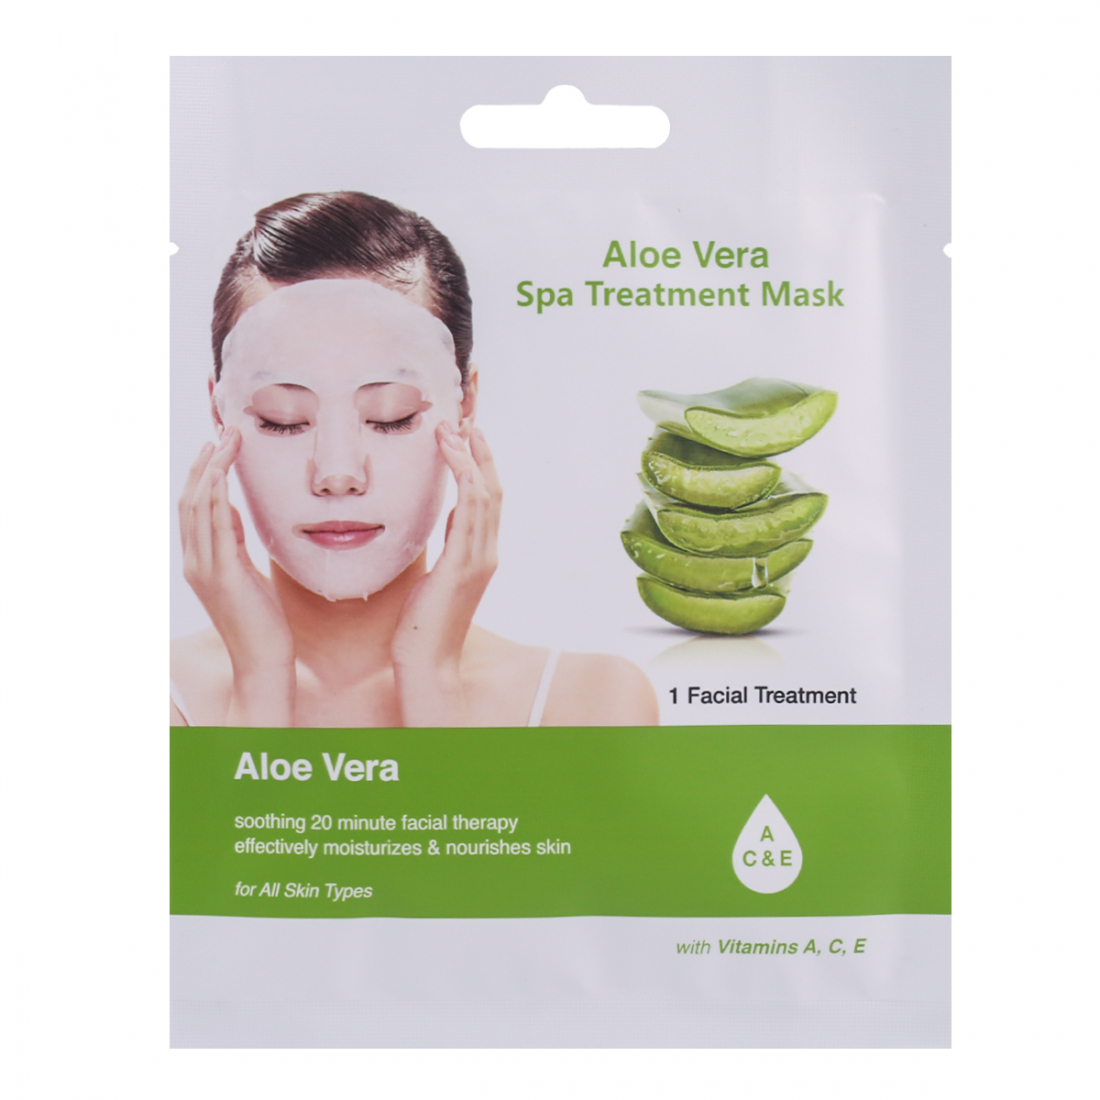 'Aloe Vera' Face Mask